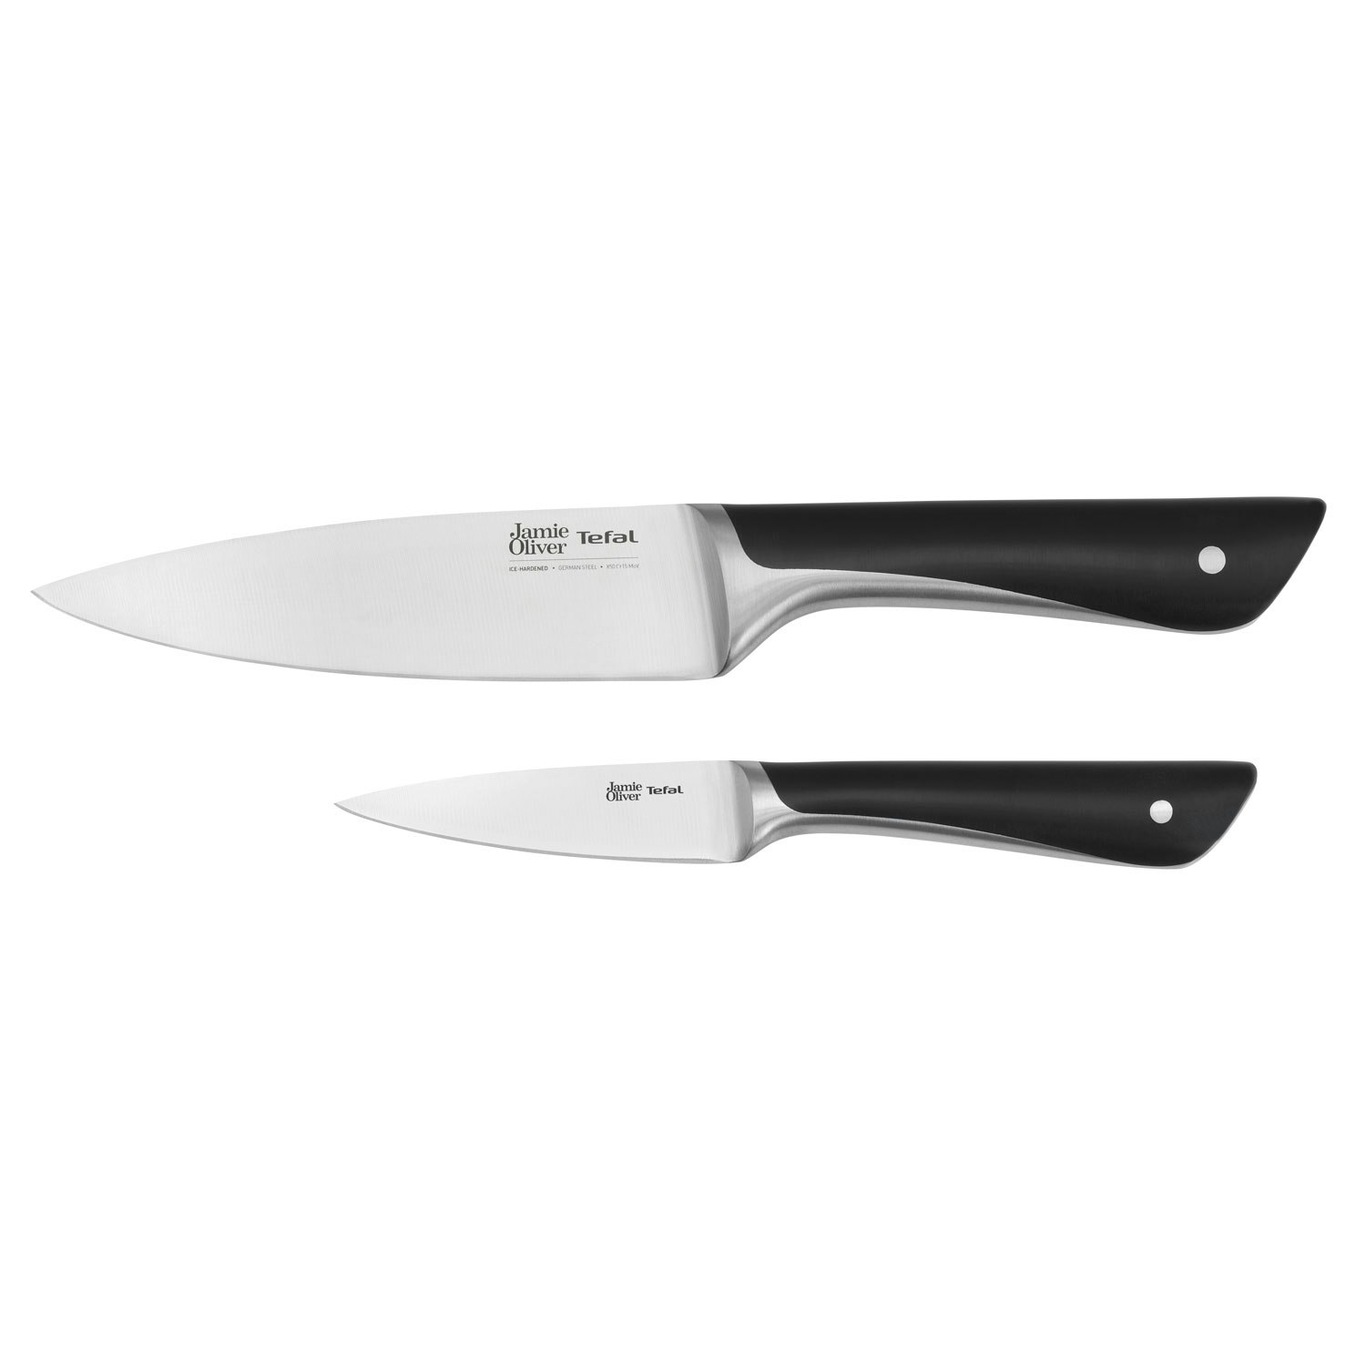 https://royaldesign.com/image/2/tefal-jamie-oliver-knife-set-2-pieces-0?w=800&quality=80